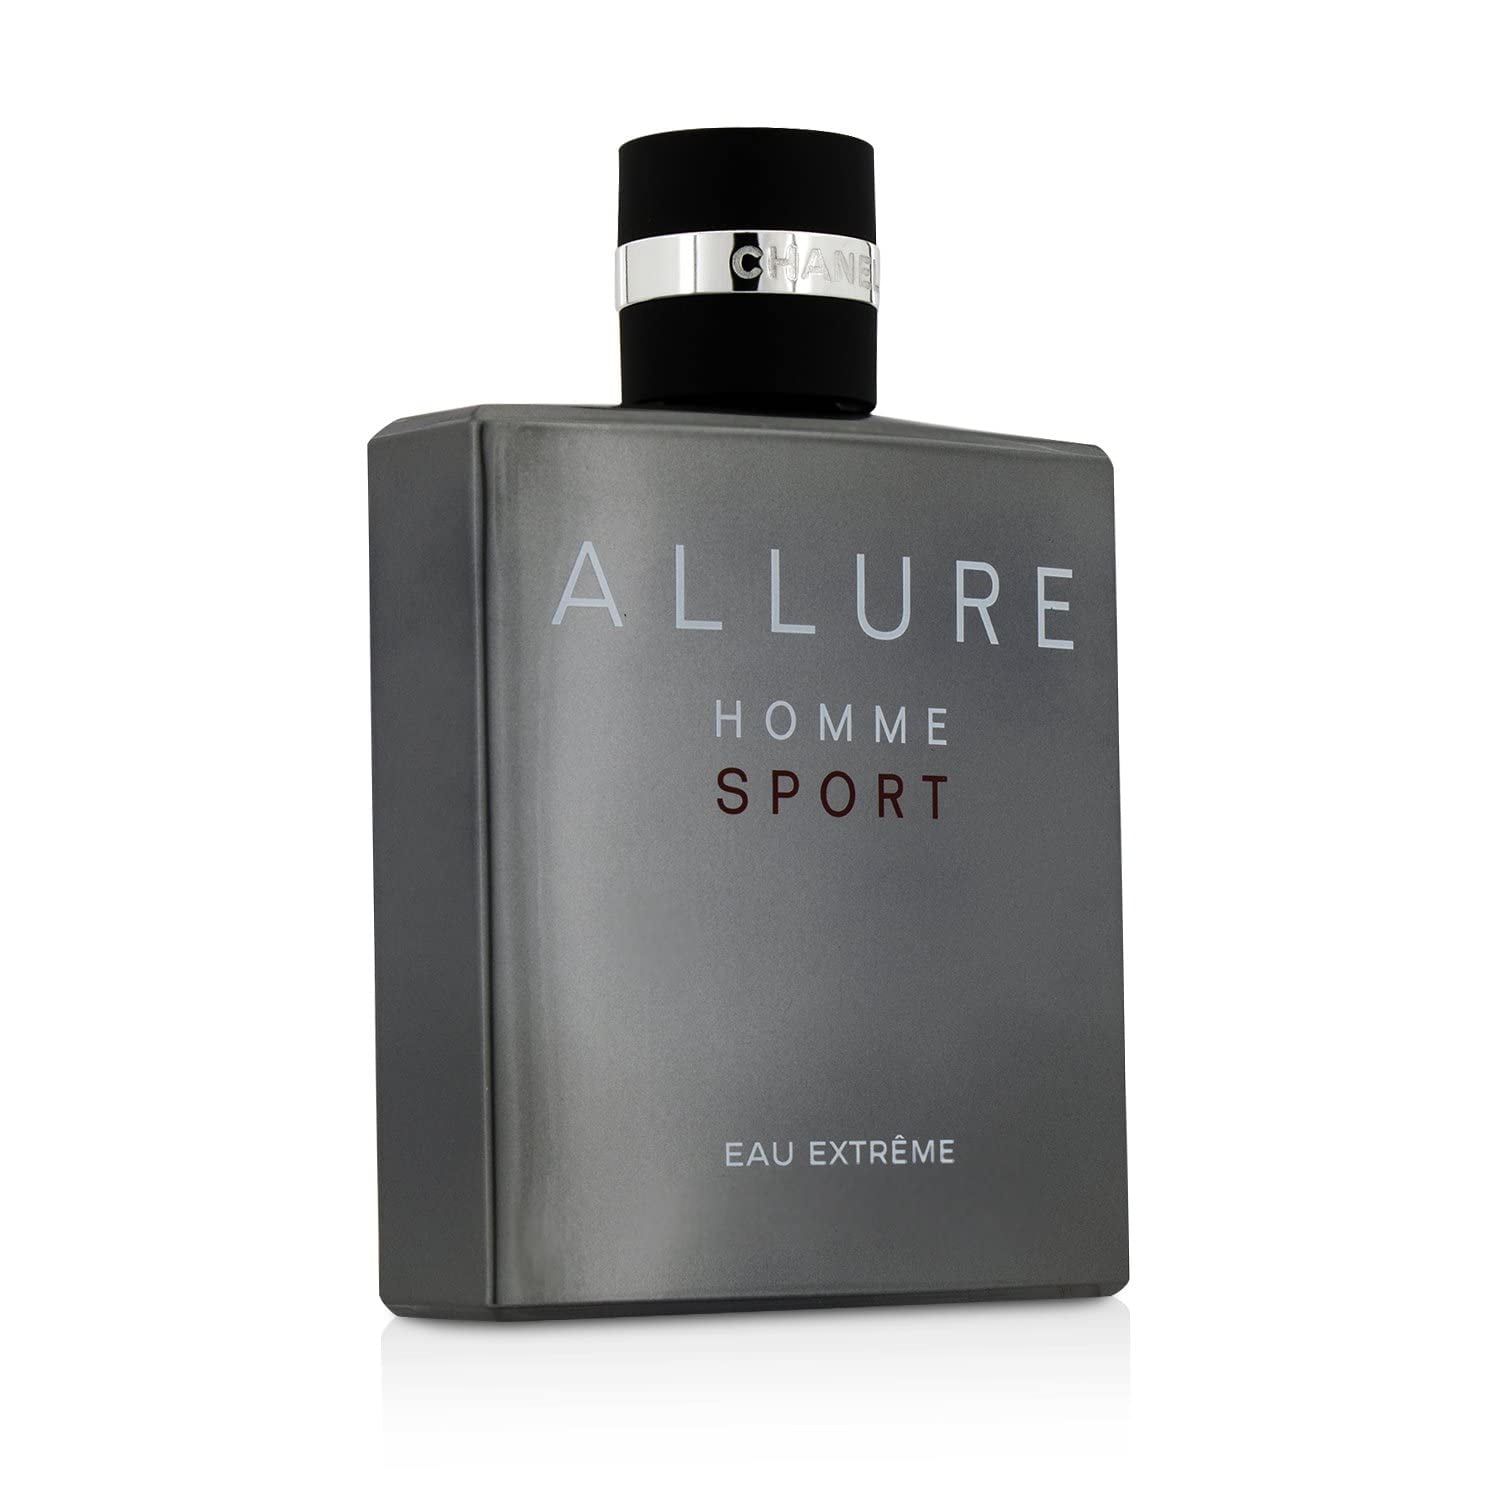 Chanel Allure Homme Sport Eau Extreme EdP 3.4 fl oz • Price »